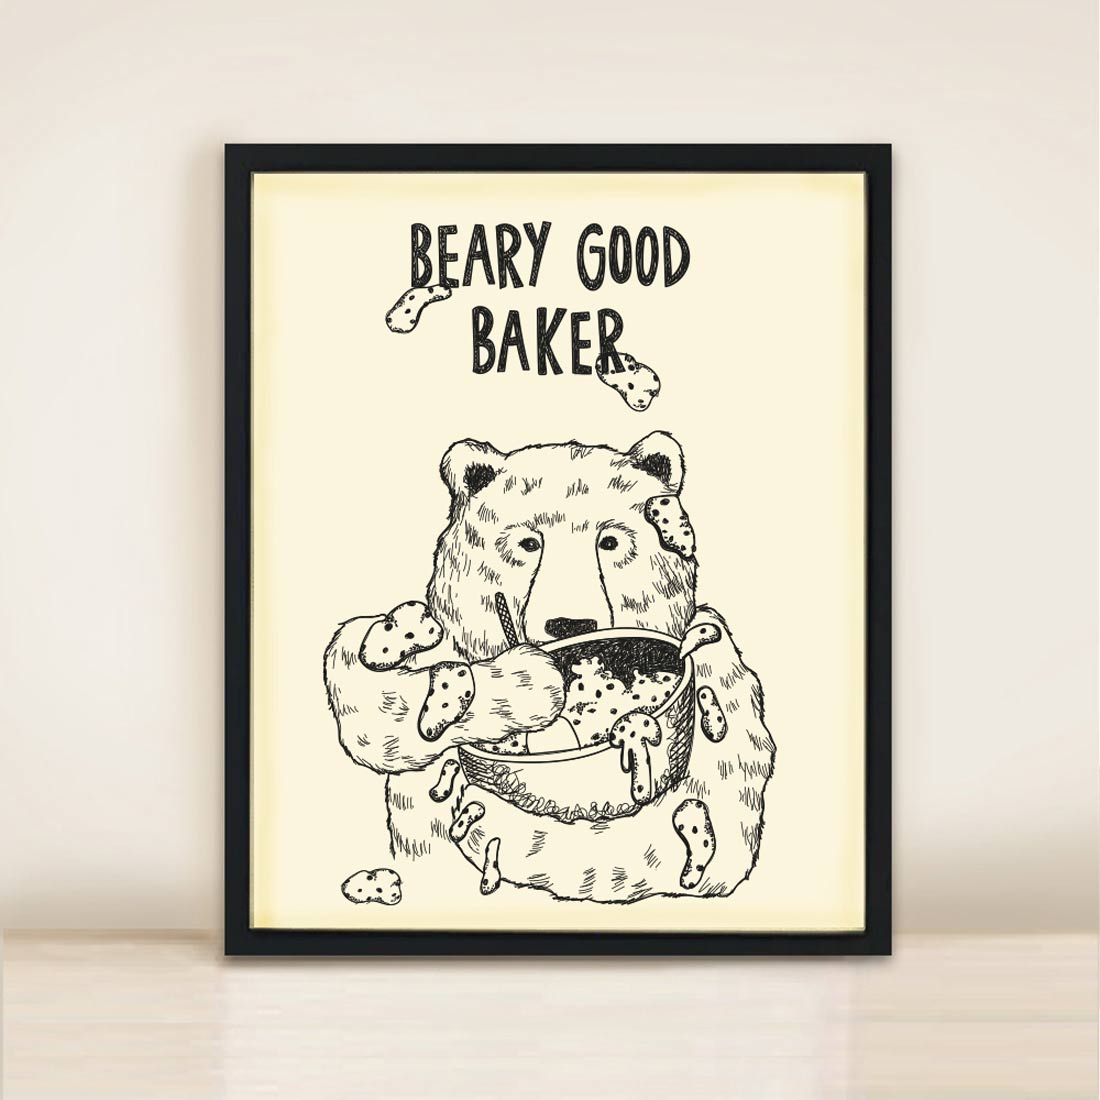 Beary Good Baker Poster Print A3